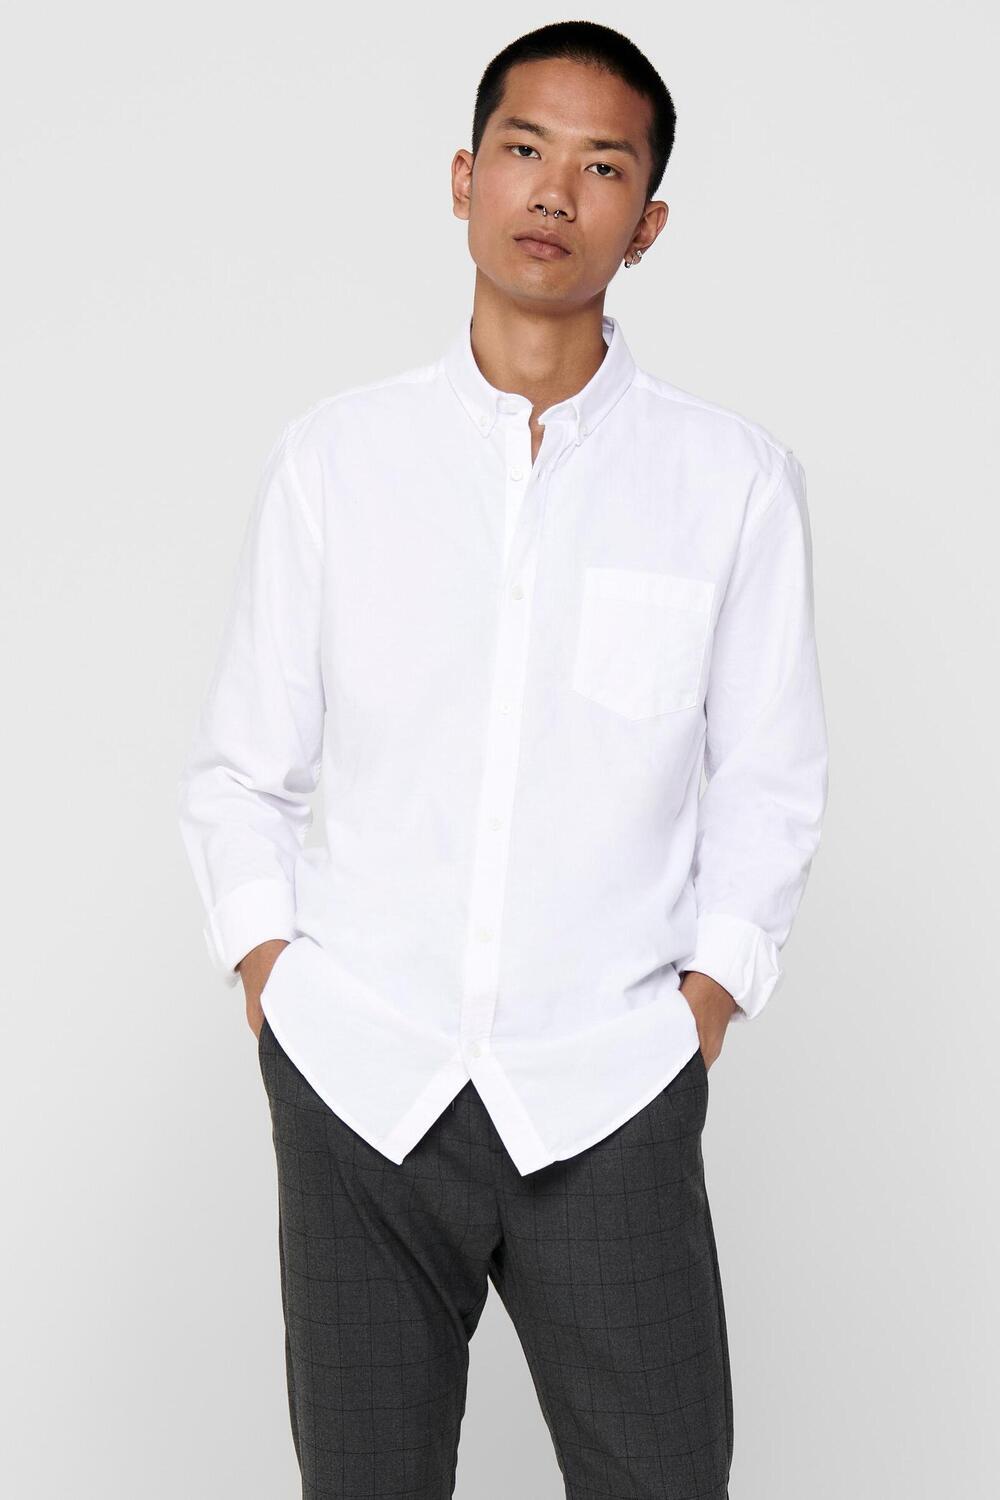 Kleding Herenkleding Overhemden & T-shirts Oxfords & Buttondowns Driedubbel kraag shirt 